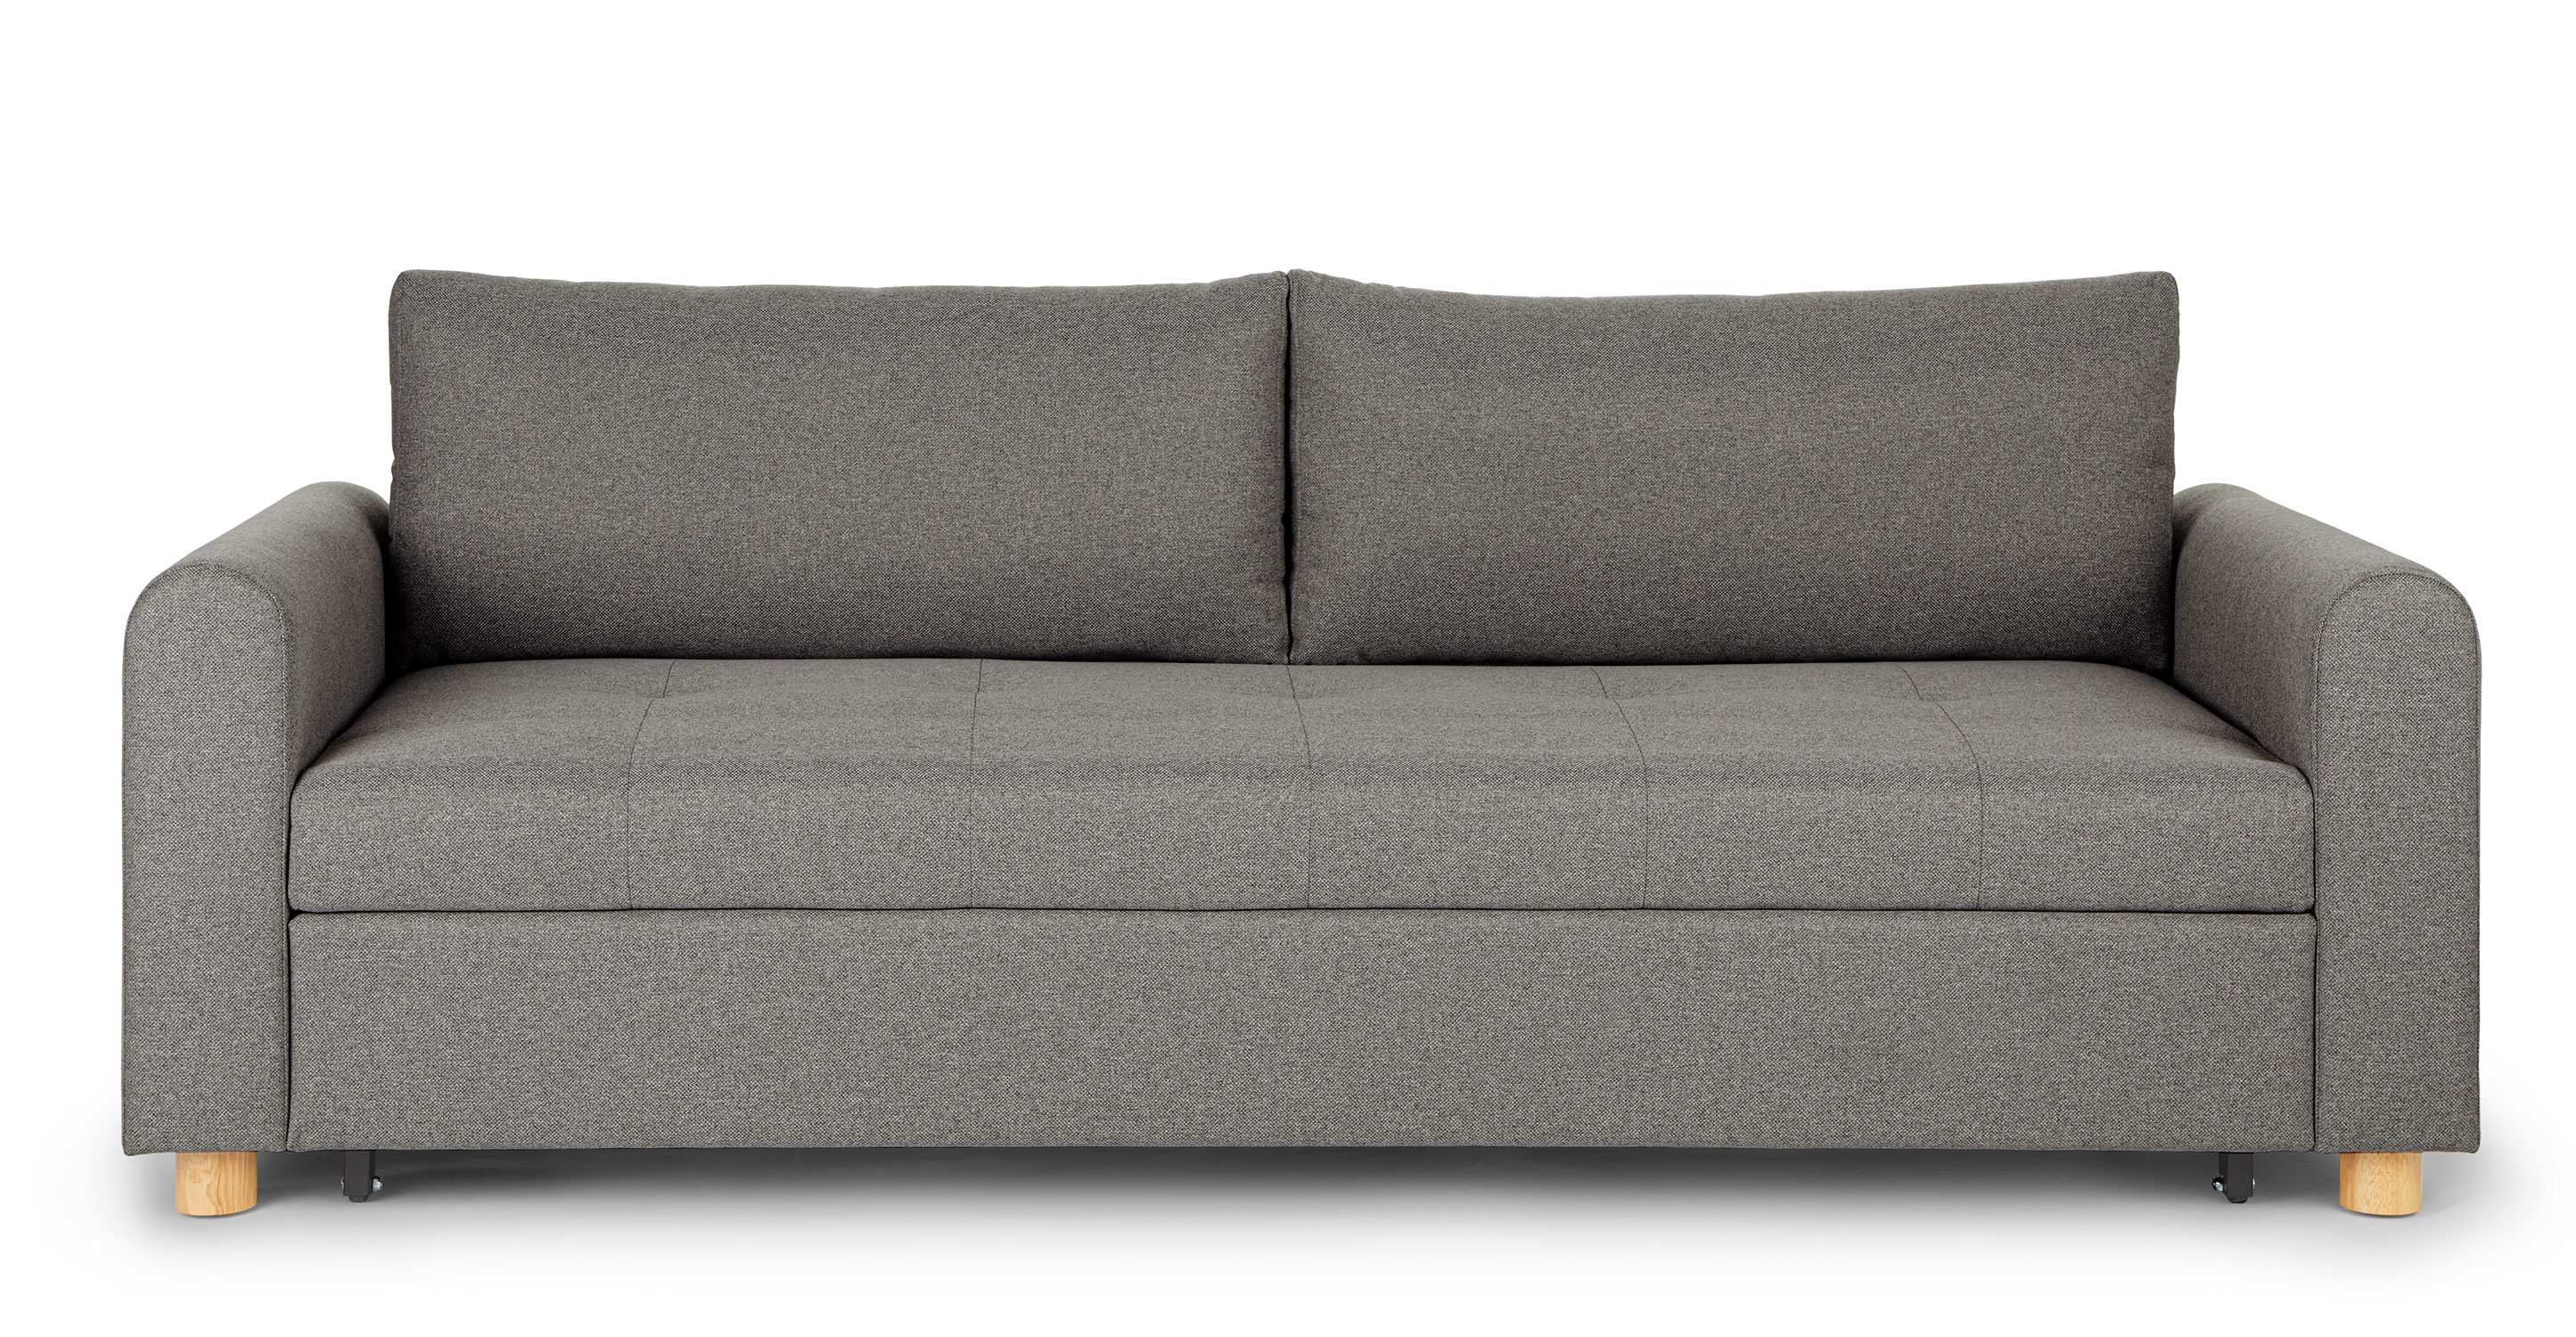 Henge Gray 2 Seater Fabric Sofa Bed